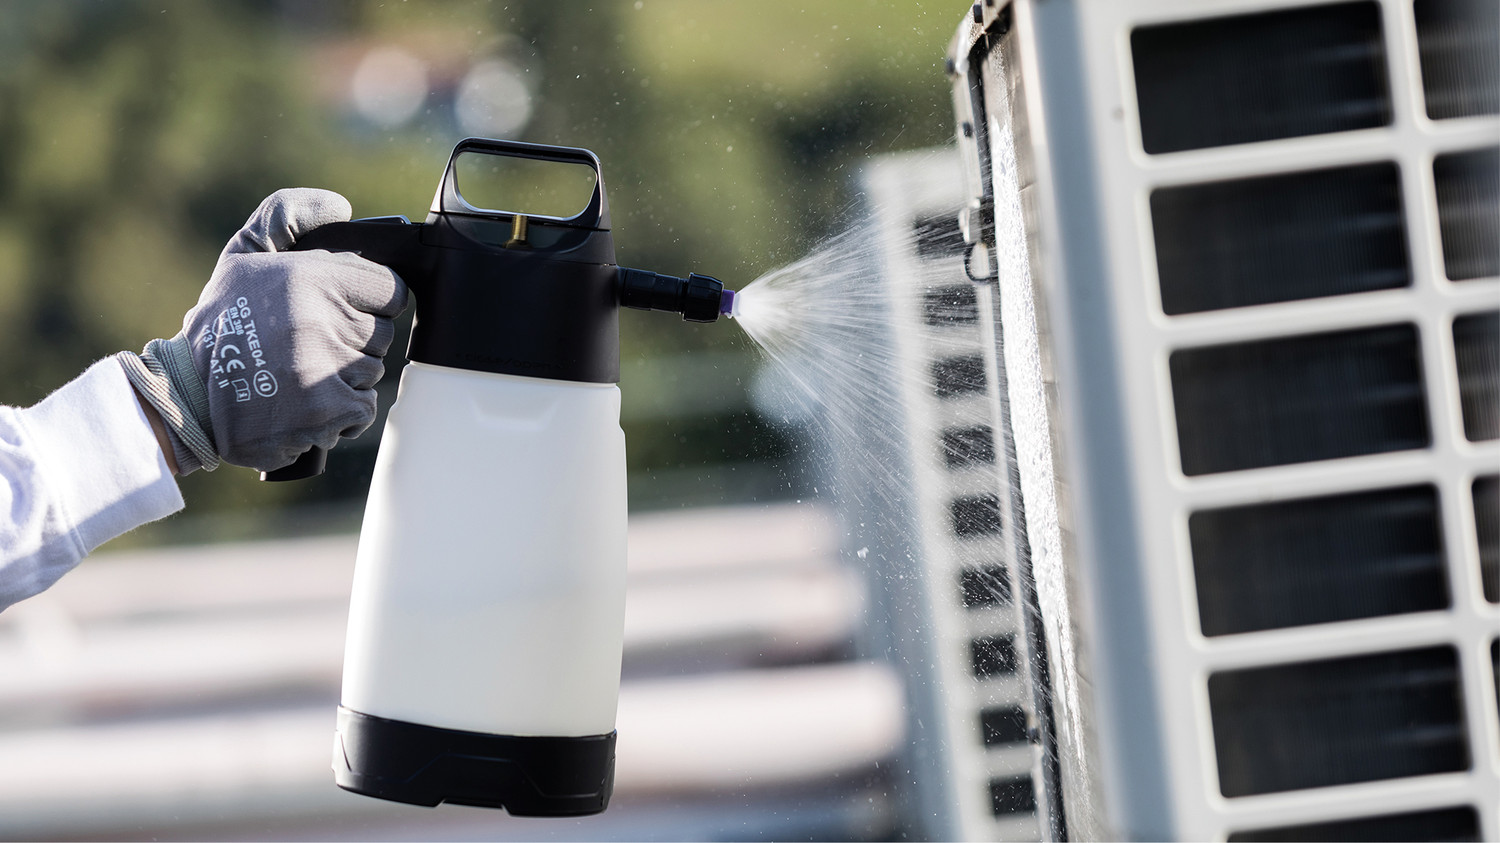  Goizper Group iK Sprayers - Foam Pro 2+ (Plus) Sprayer - Pump  Spray Foamer with Schrader Valve - Professional Car Wash & Detailing,  Dry/Wet Foam, Pressure Release Safety Valve, PVC Hoses (